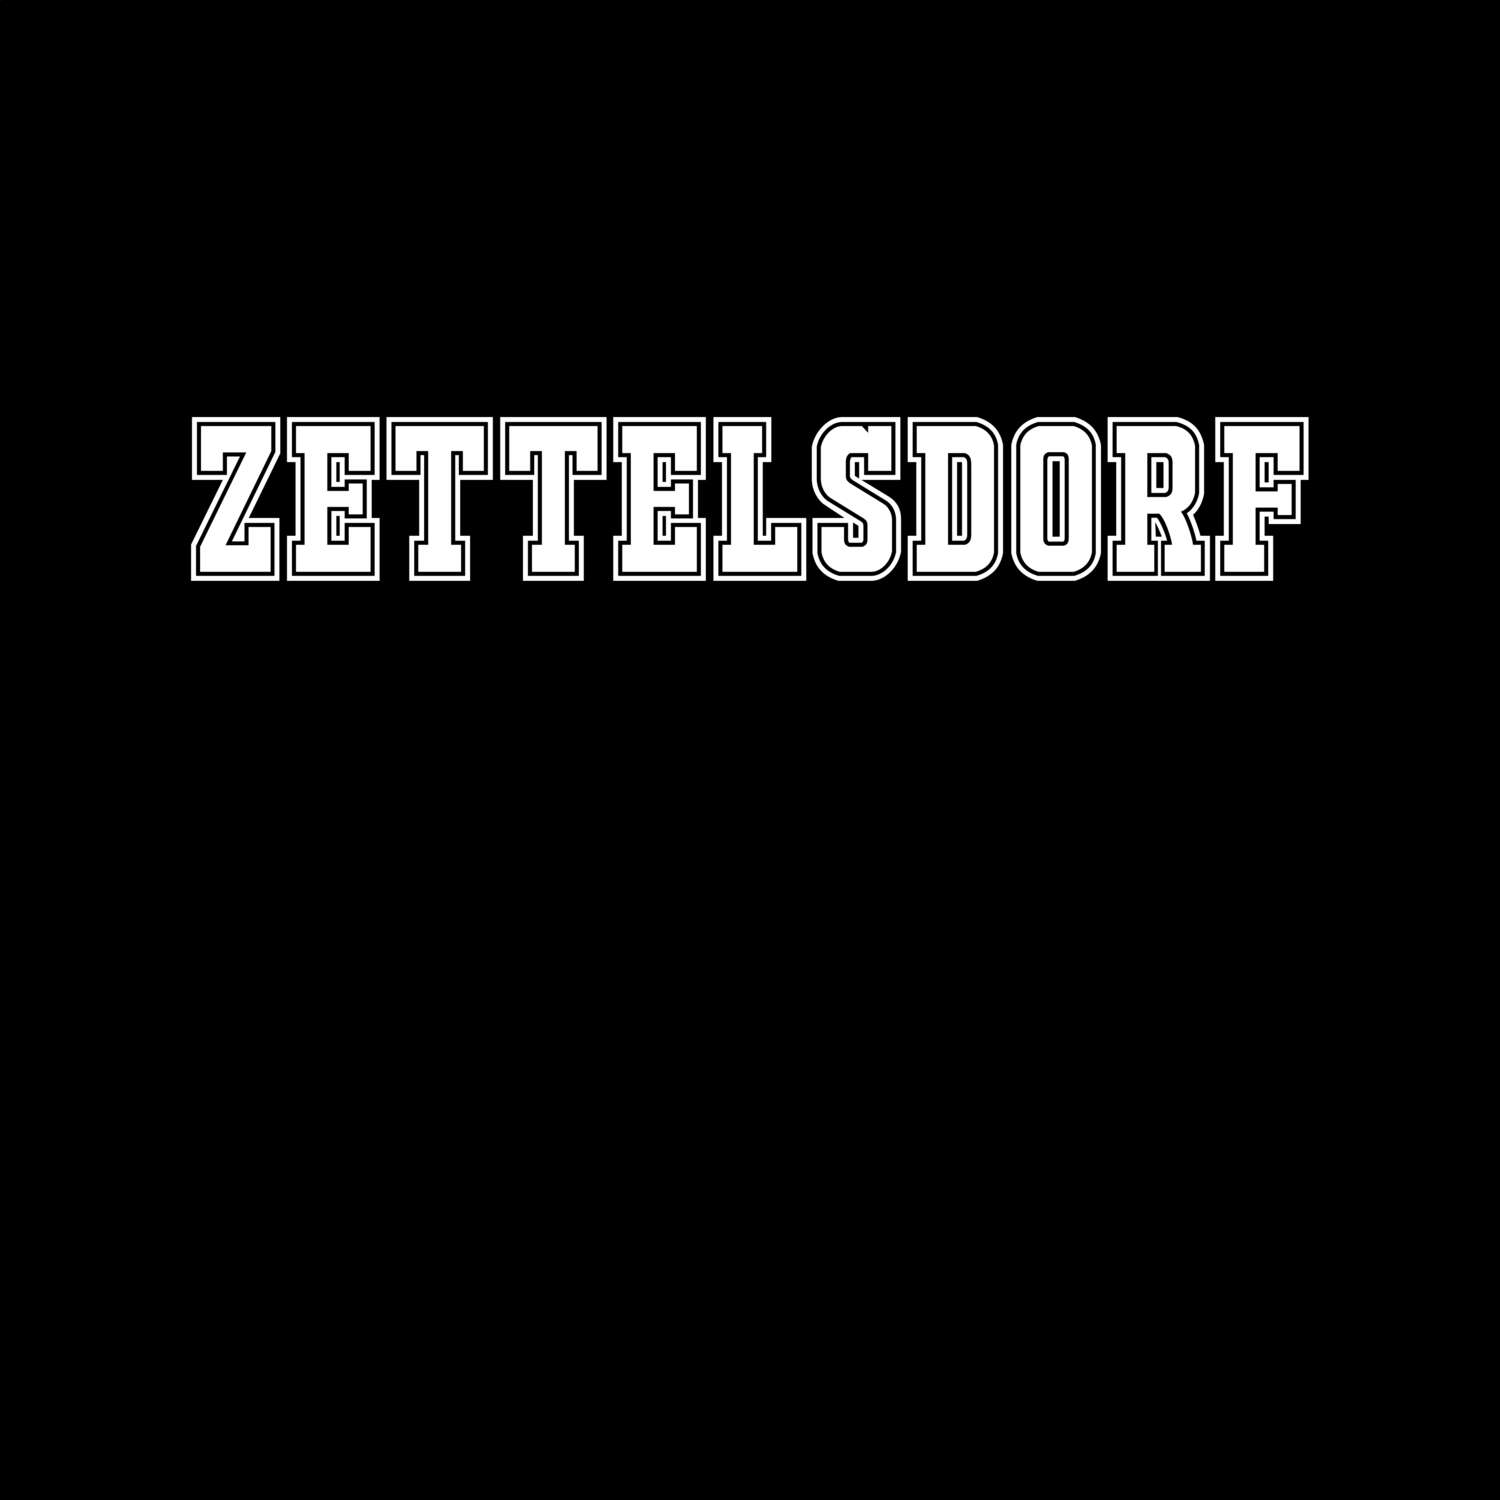 Zettelsdorf T-Shirt »Classic«